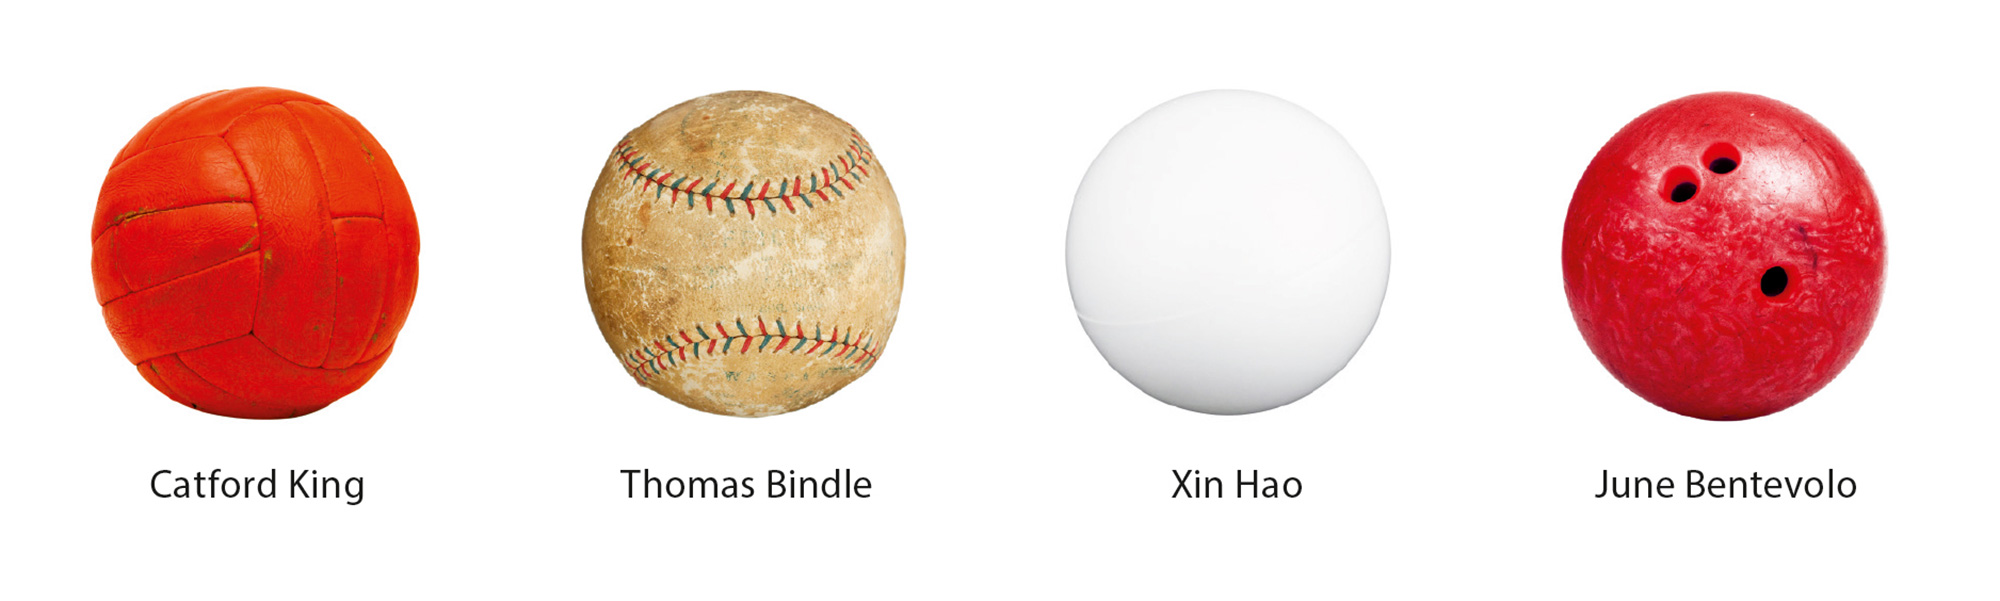 An image of four balls, “Catford King,” a soccer ball, “Thomas Bindle,” a baseball, “Xin Hao,” a table tennis ball, and “June Bentevolo,” a bowling ball.